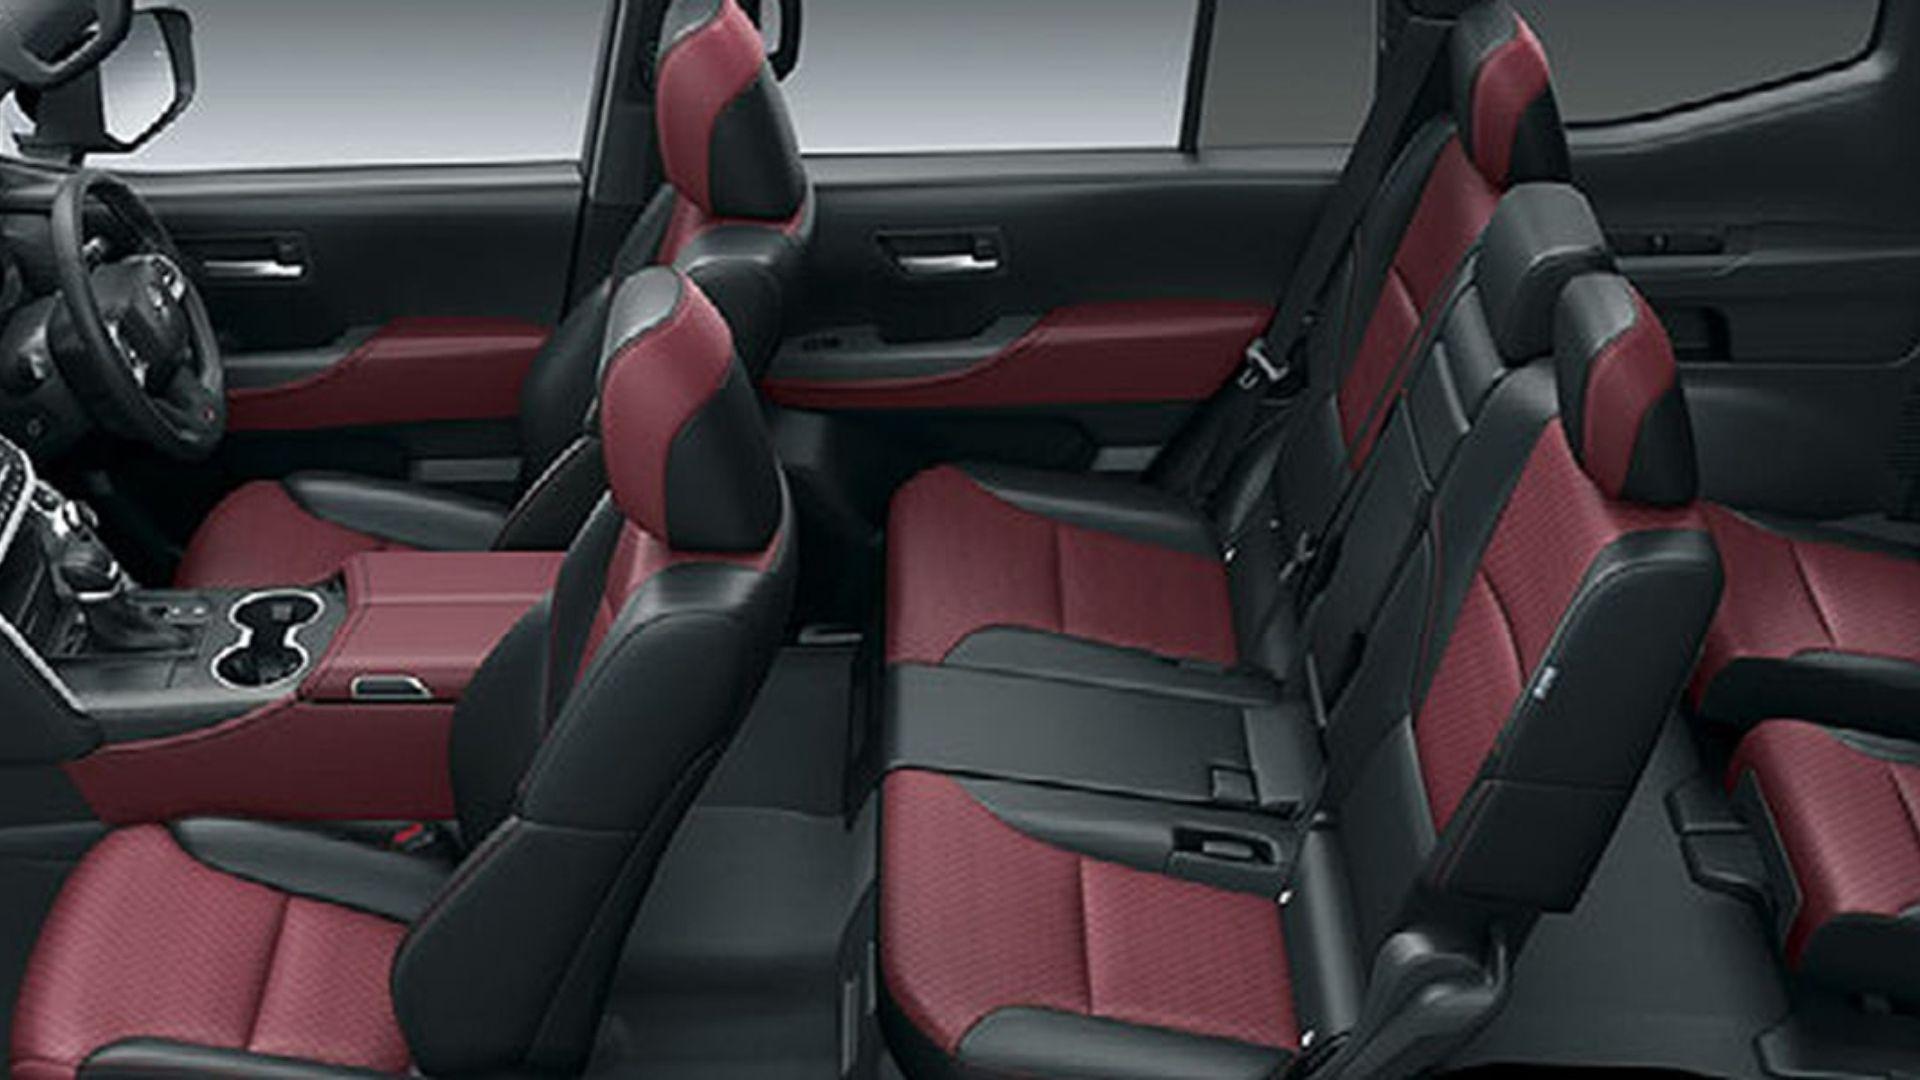 TRAC - LuxCar - Toyota Landcruiser - Interior 2.jpg